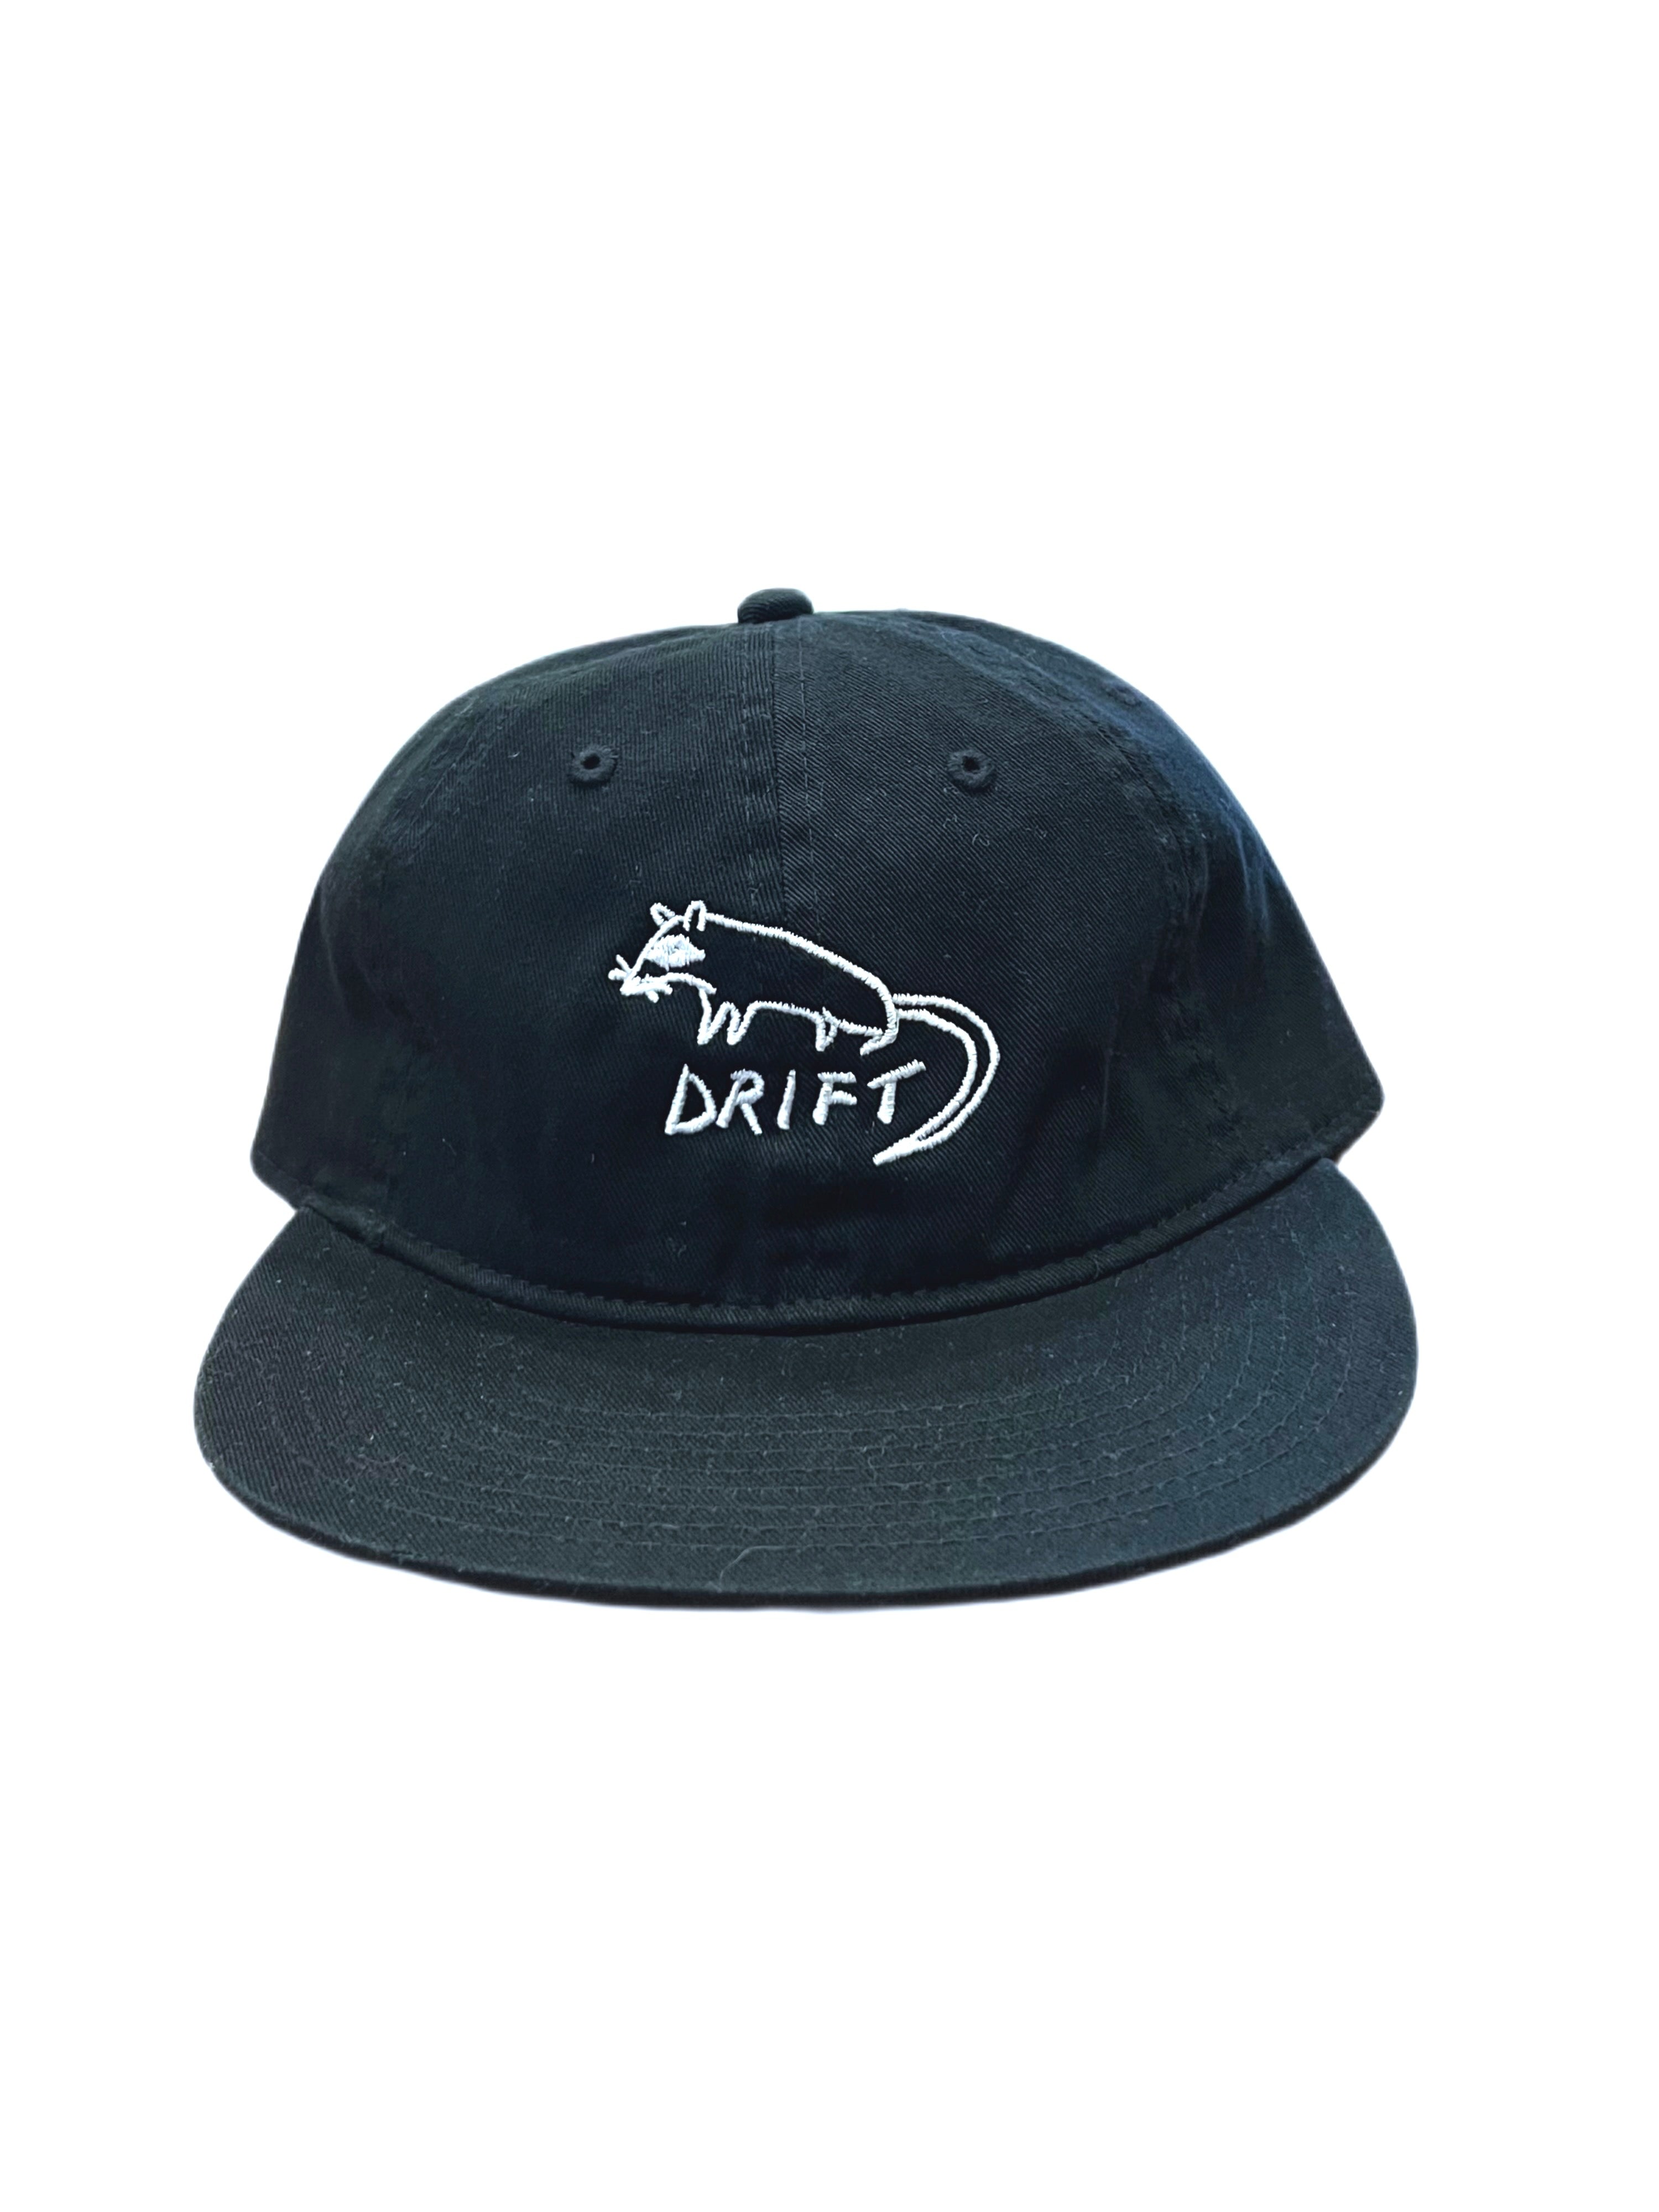 RAT DRIFT HAT